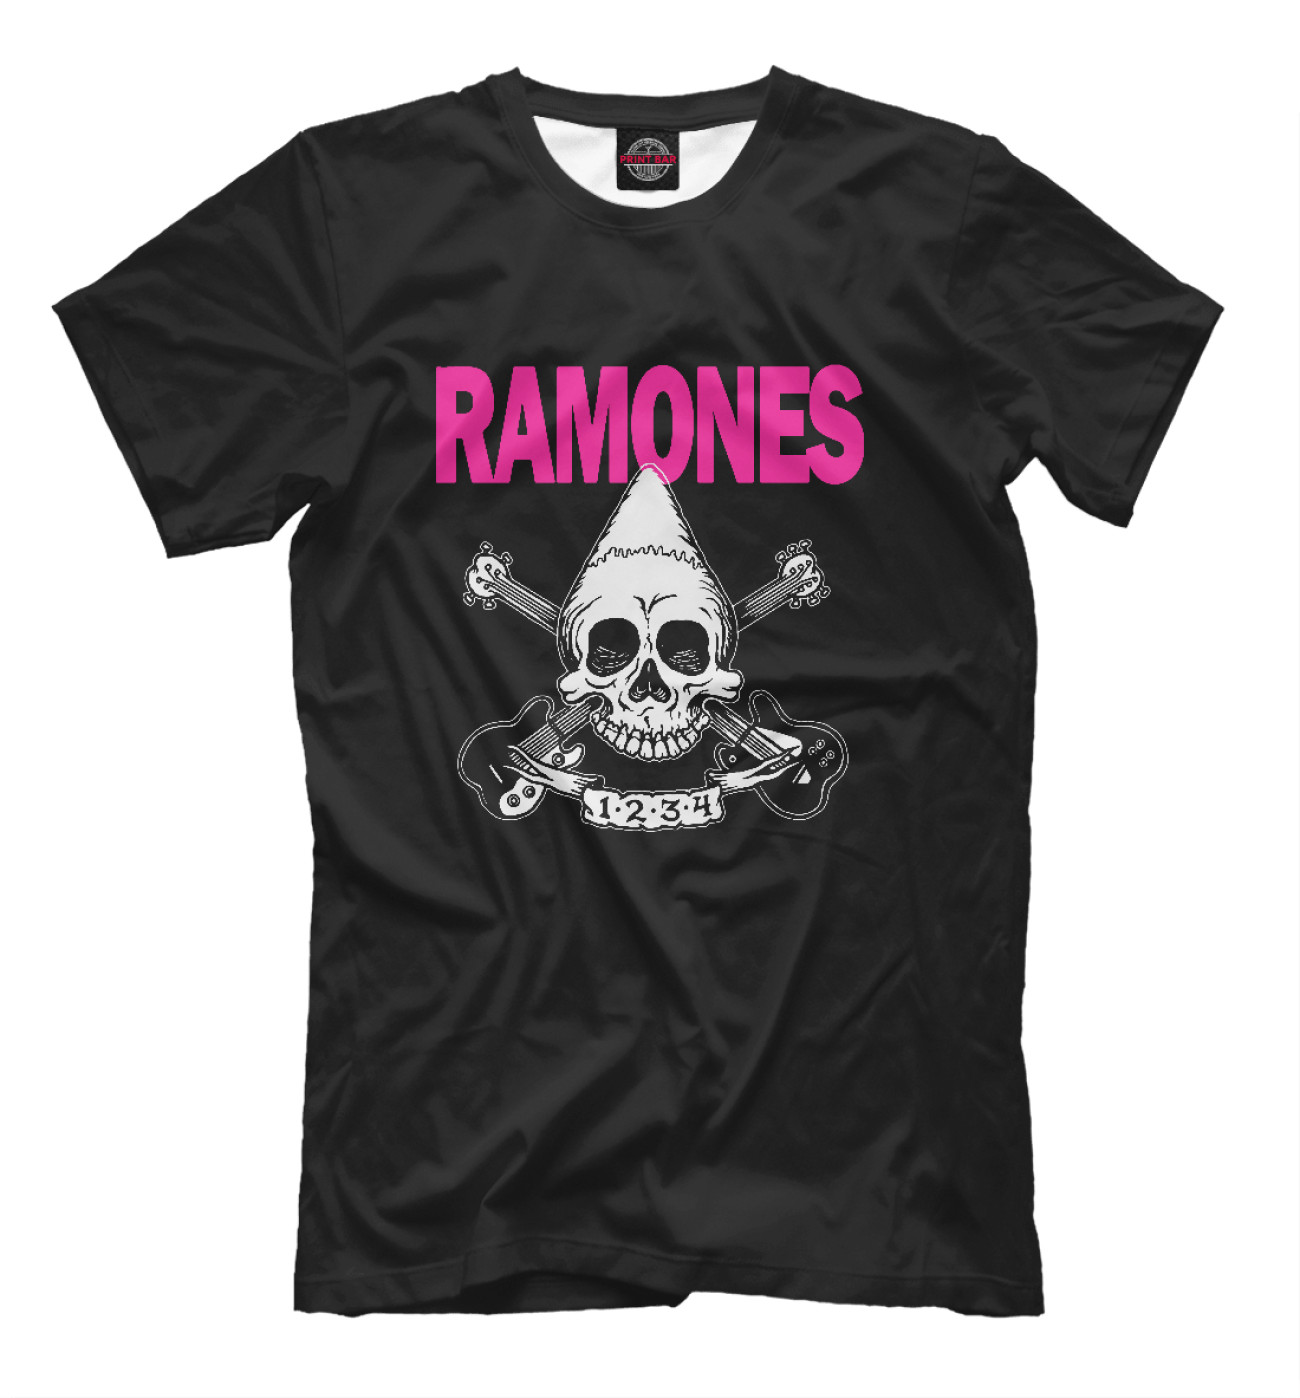 Мужская Футболка Ramones, артикул: RMN-641965-fut-2